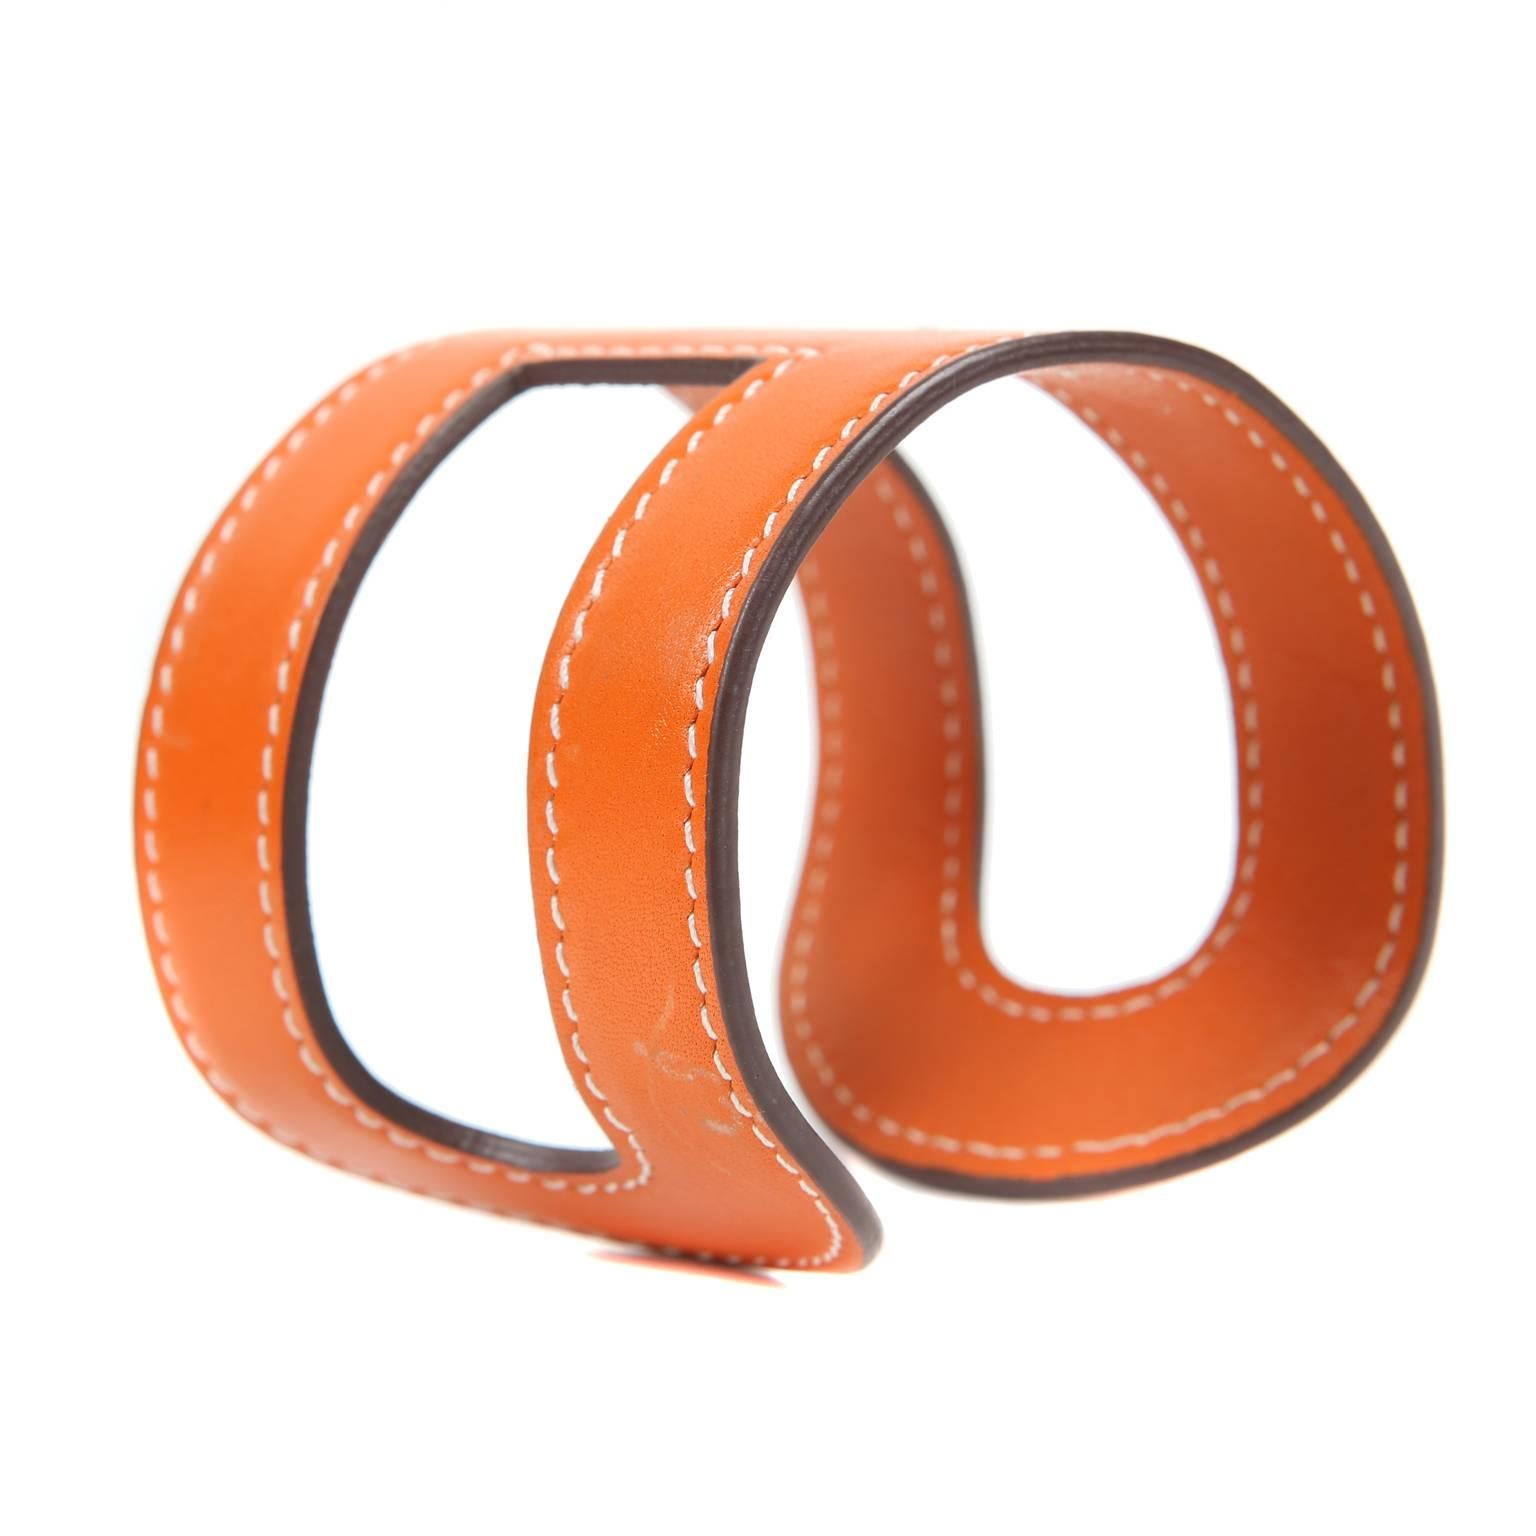 Hermès Orange Leather H Cuff Bangle Bracelet In Excellent Condition For Sale In Malibu, CA